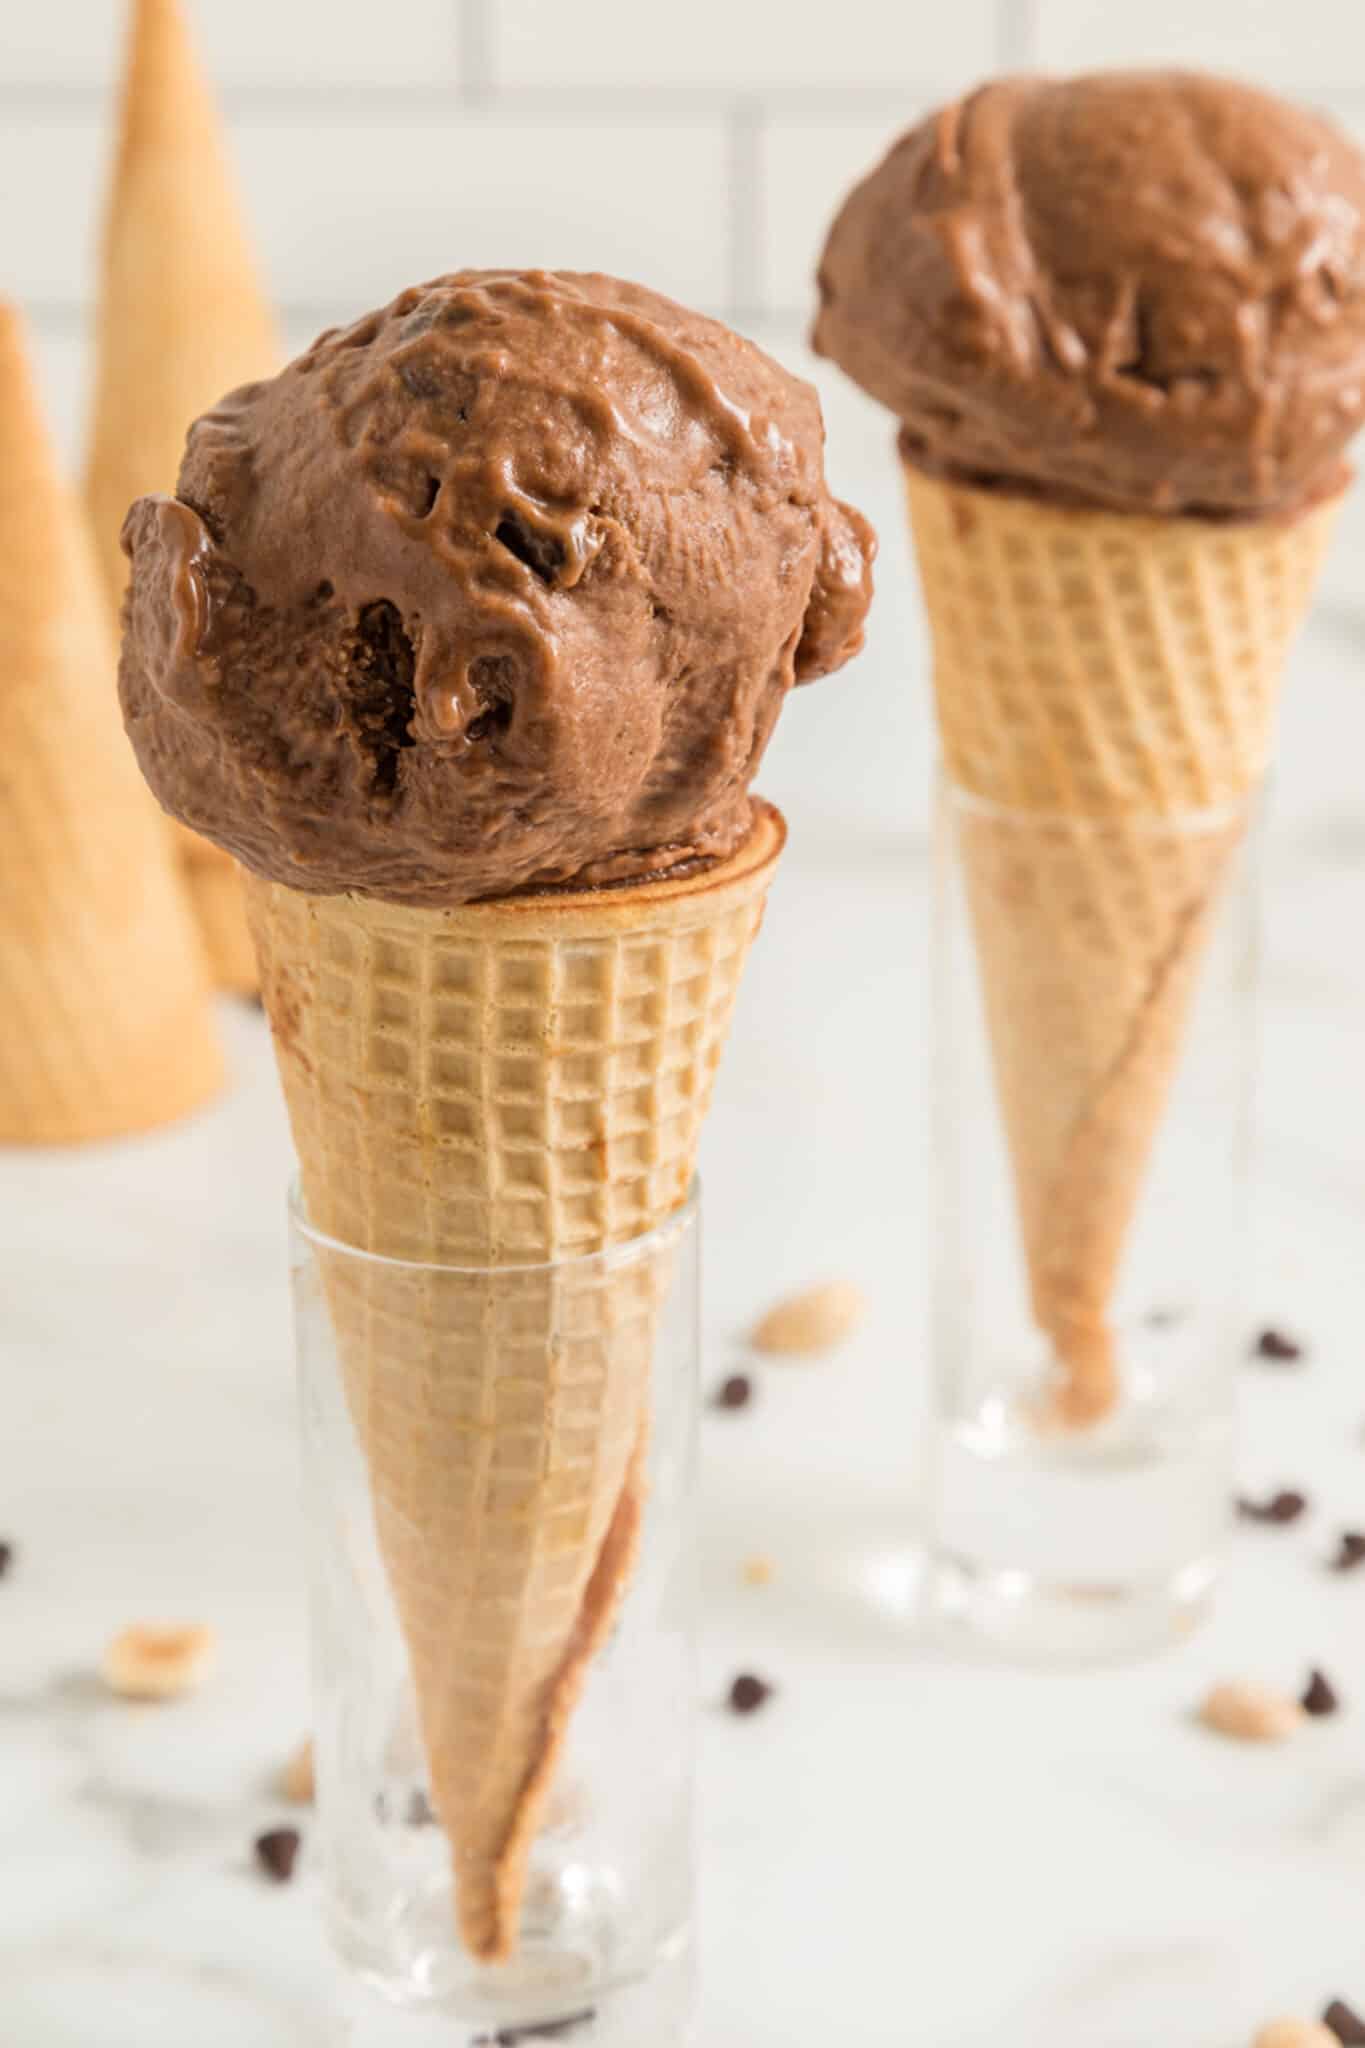 chocolate avocado ice cream served in cones.